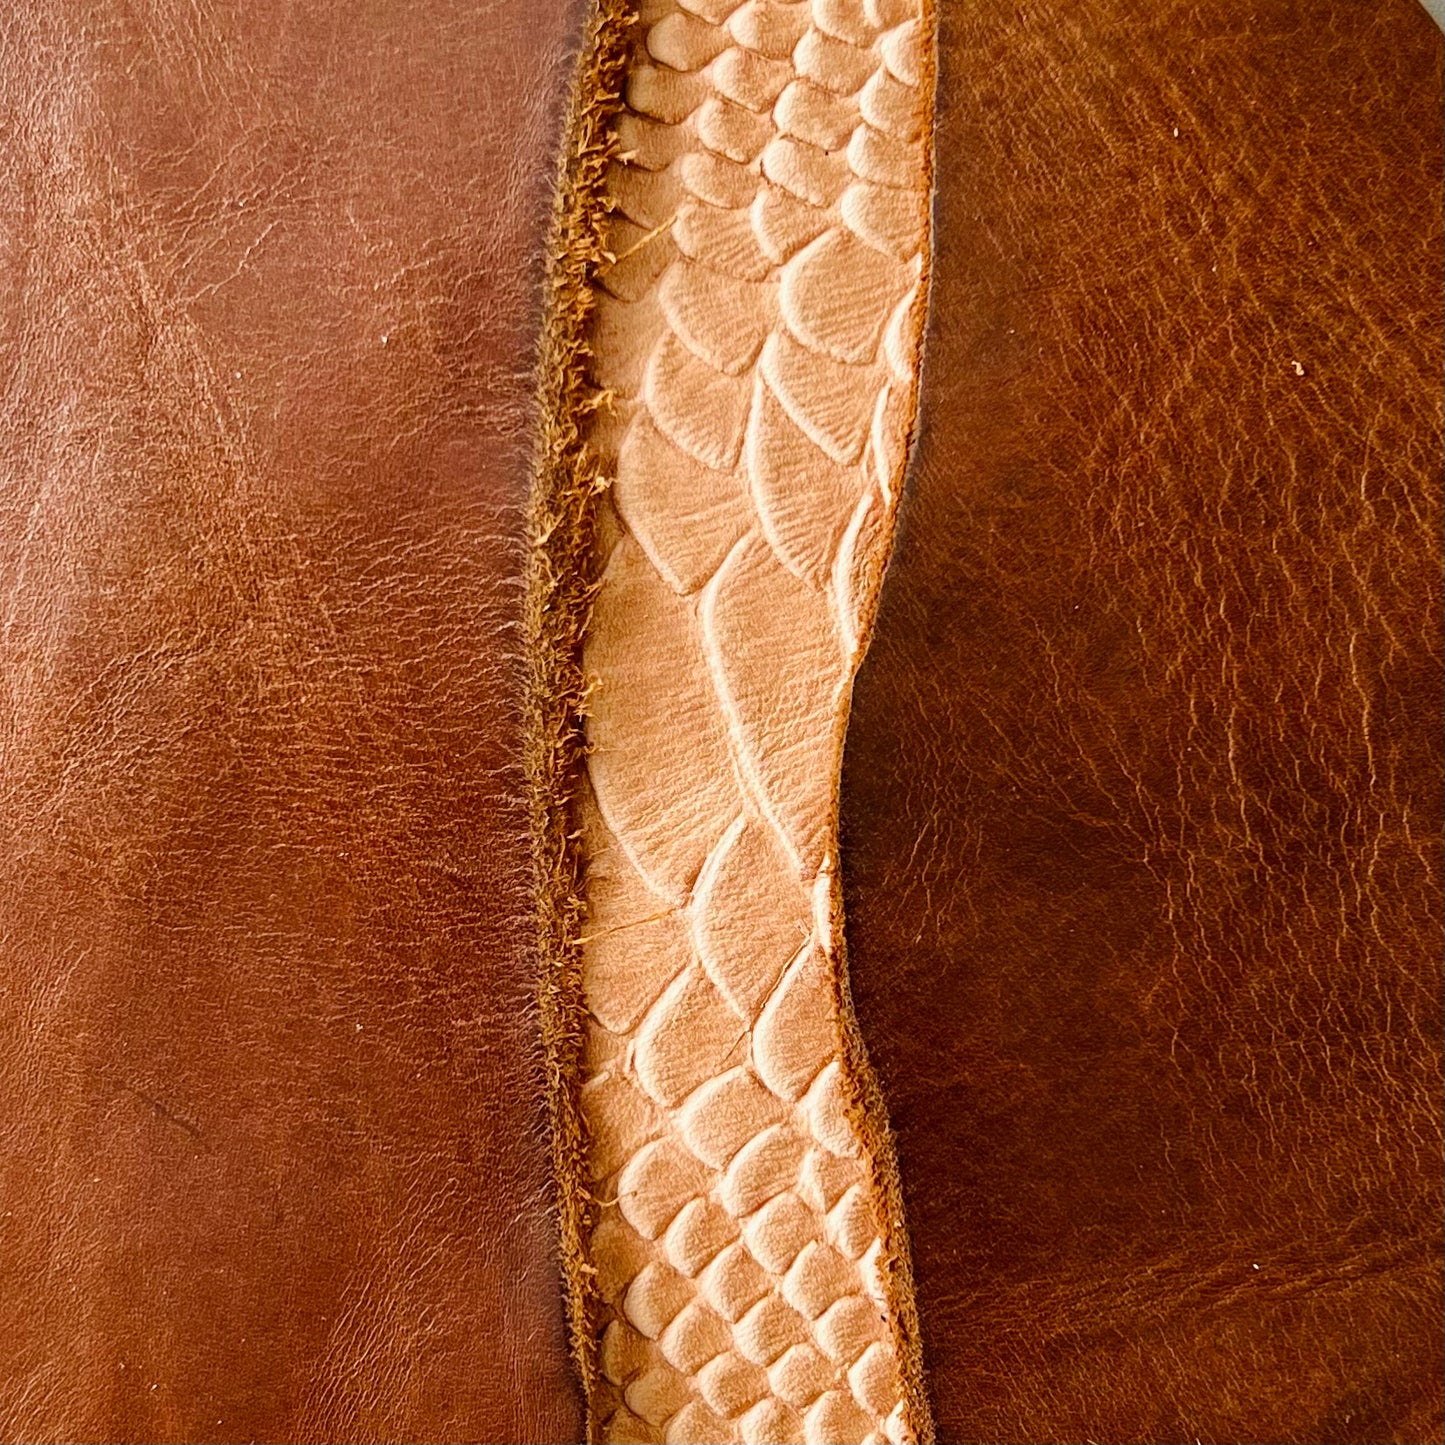 Moon River Leather Crossbody Bag